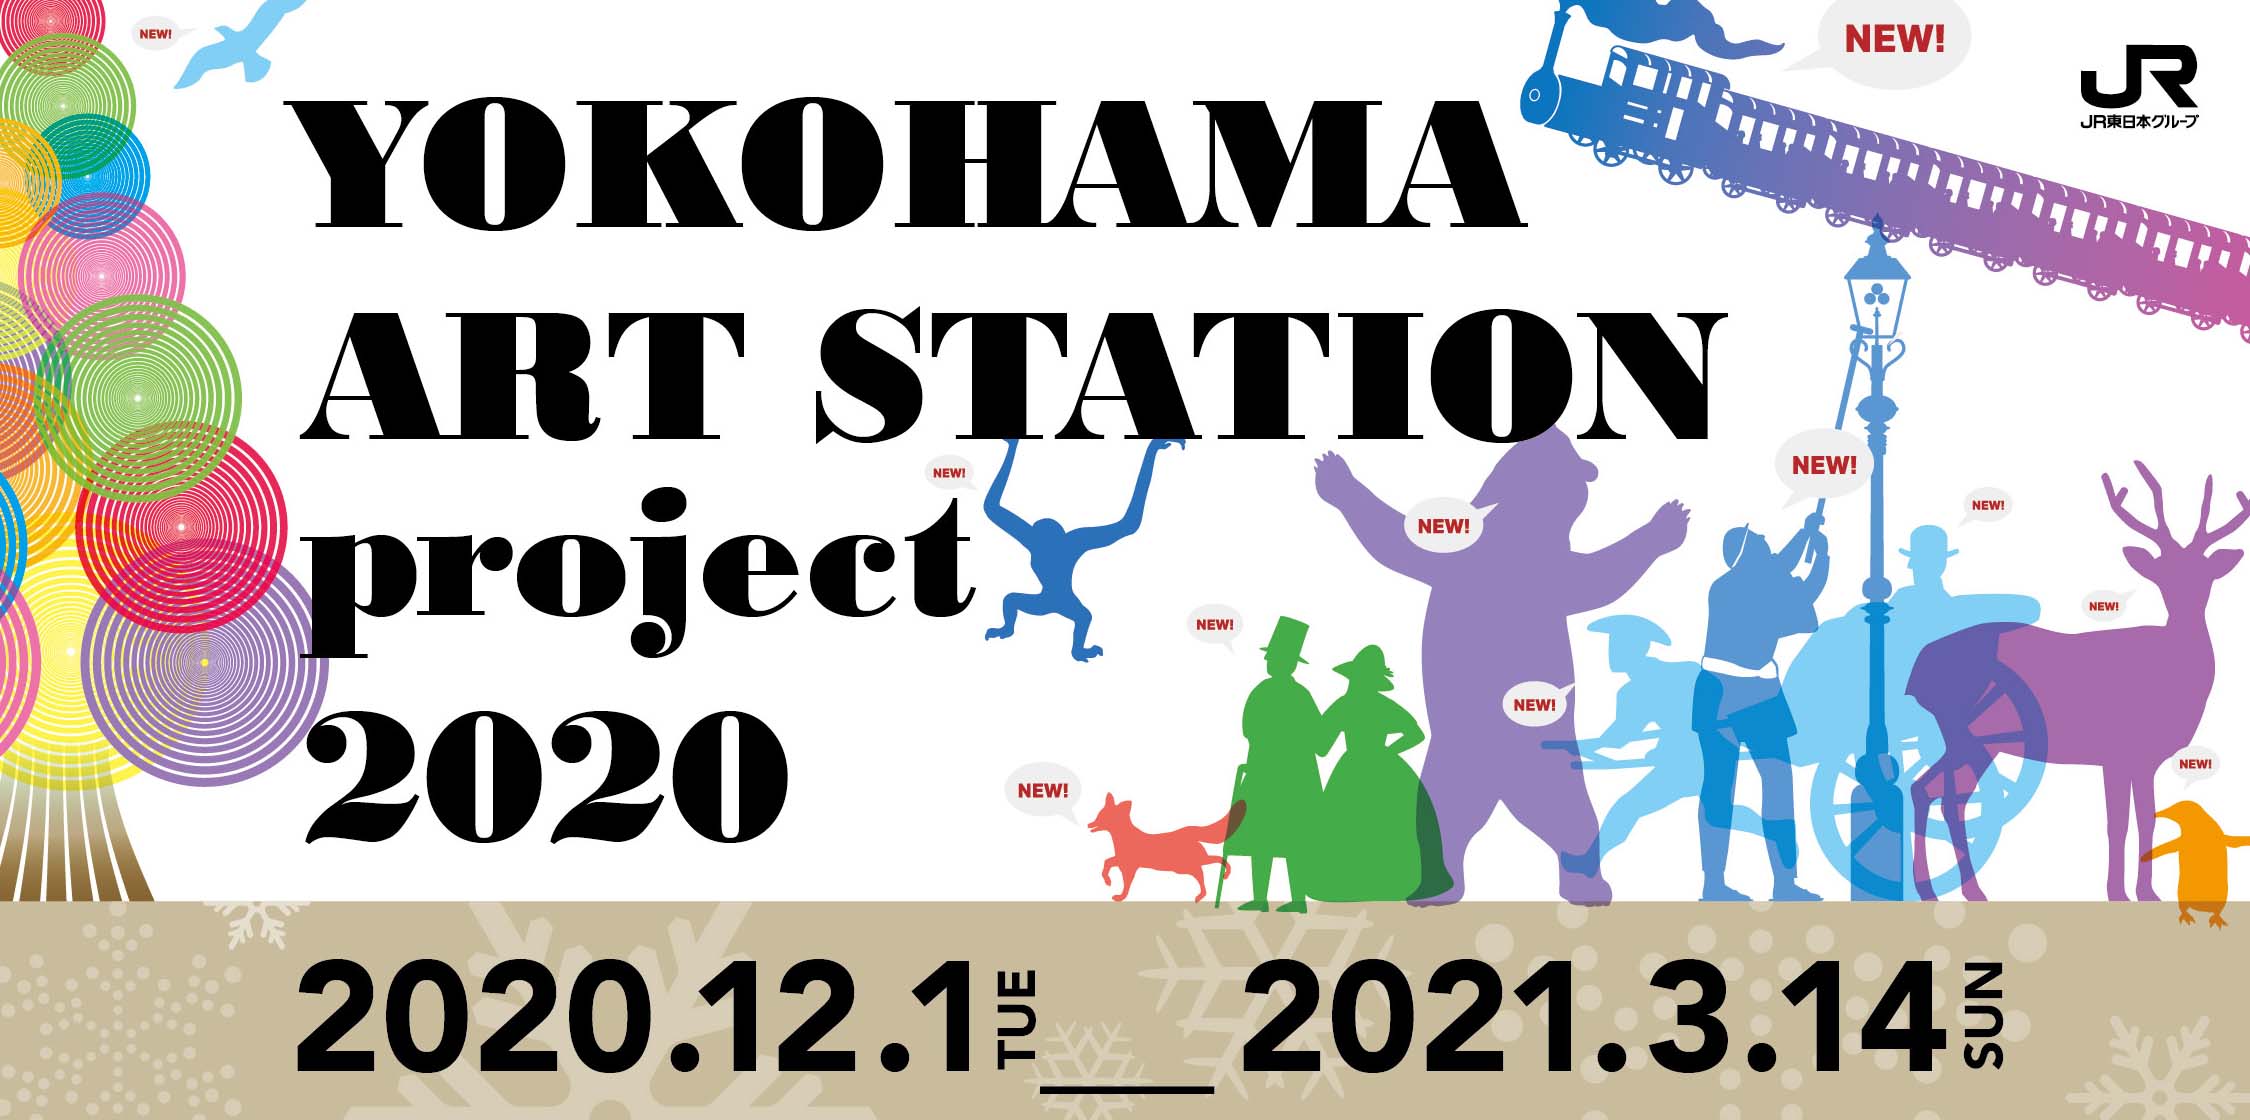 YOKOHAMA ART STATION 新しい横浜駅始まる